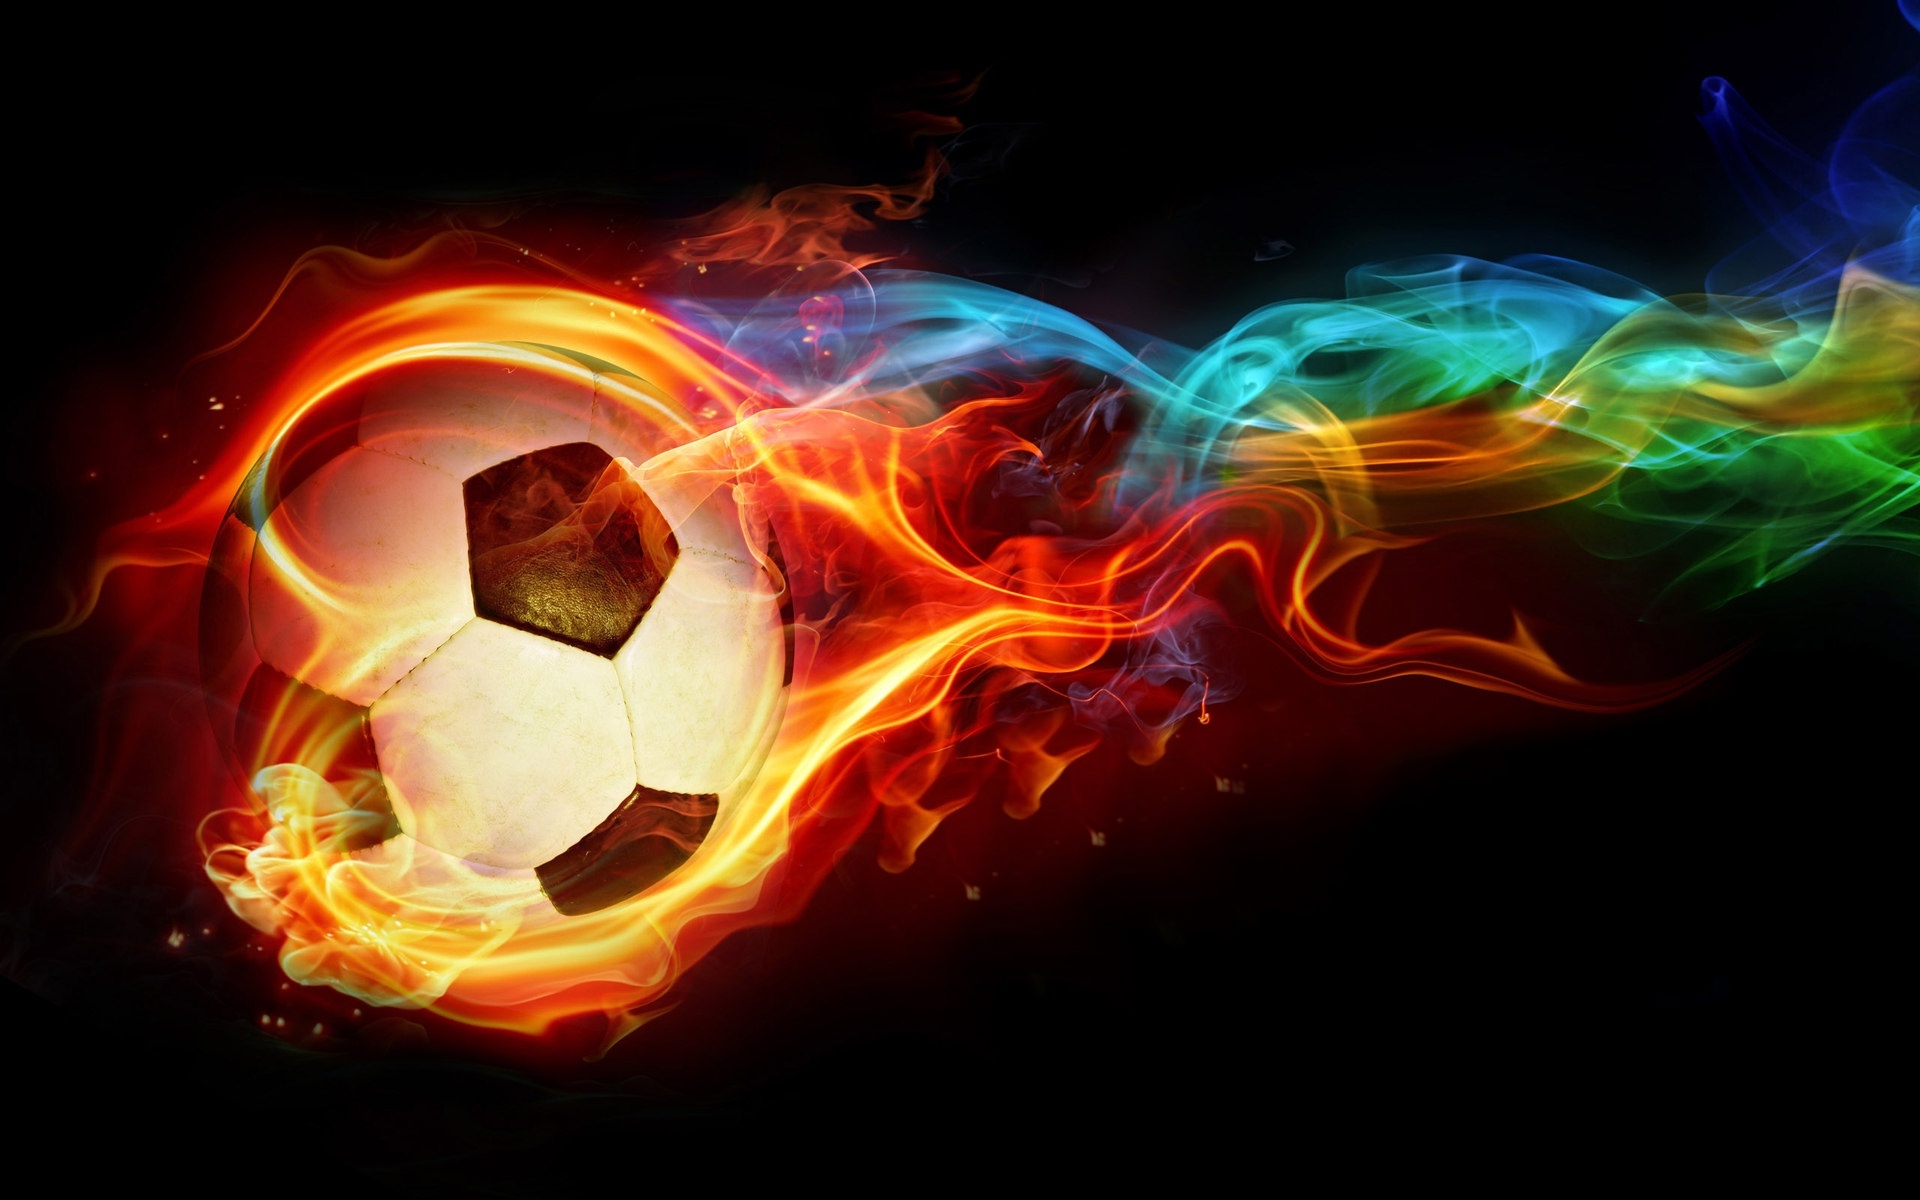 Cool Soccer Balls drawing free image